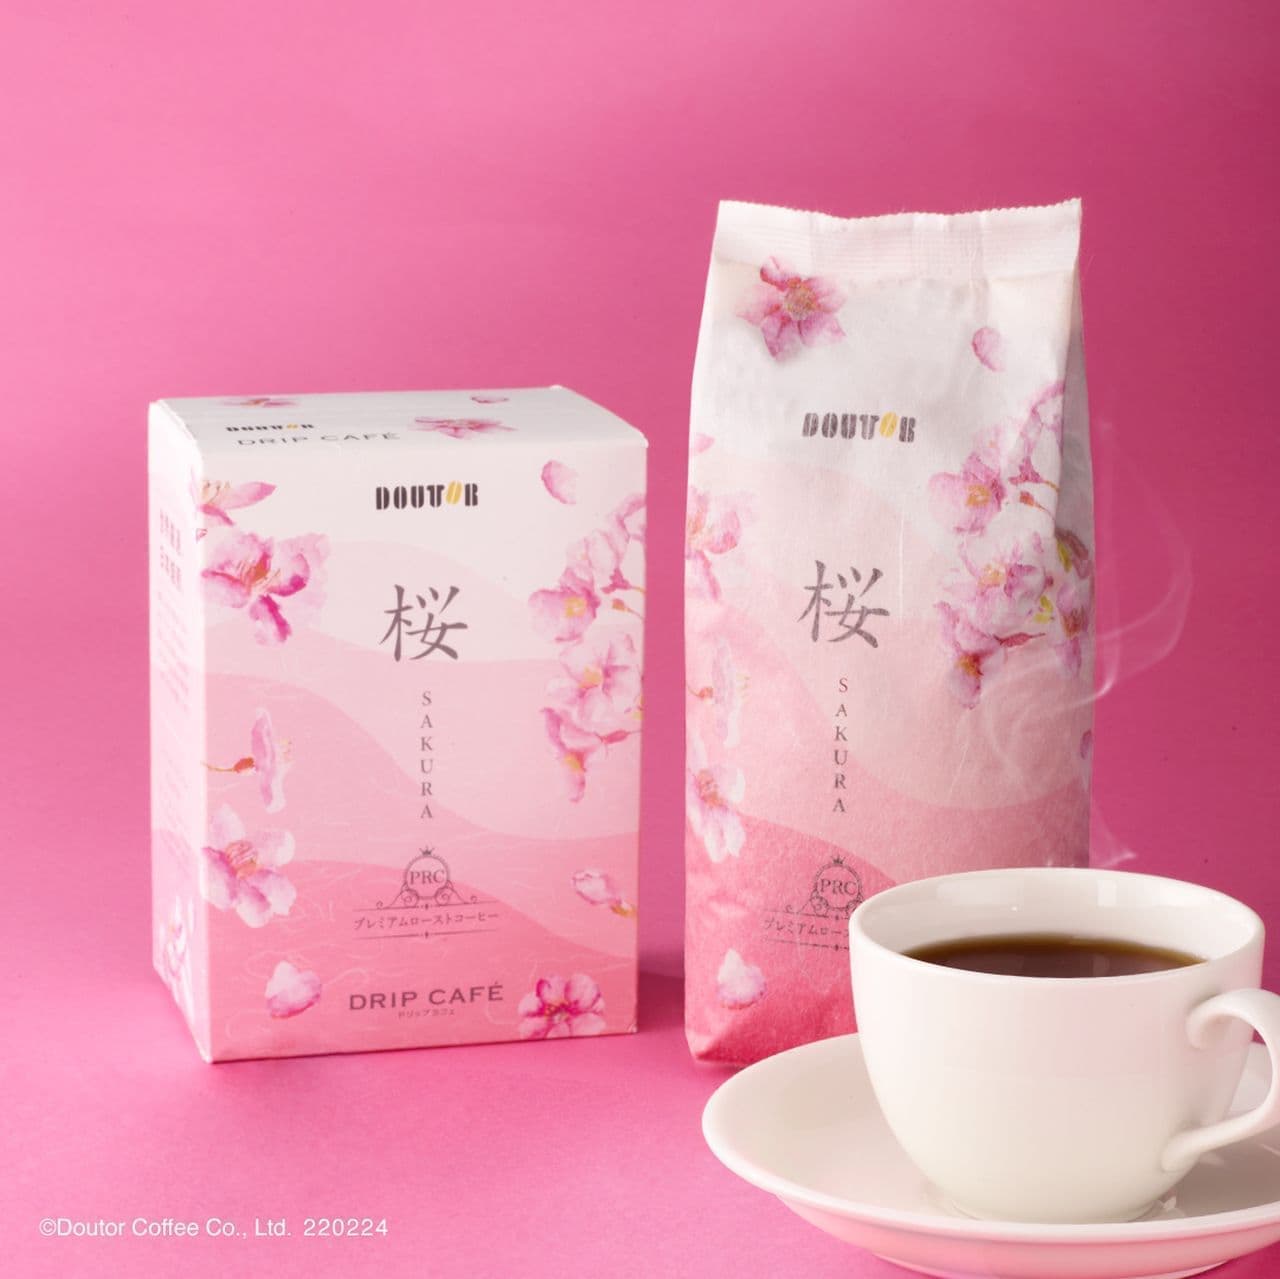 Doutor Coffee Shop "Premium Roast Coffee Cherry Blossom